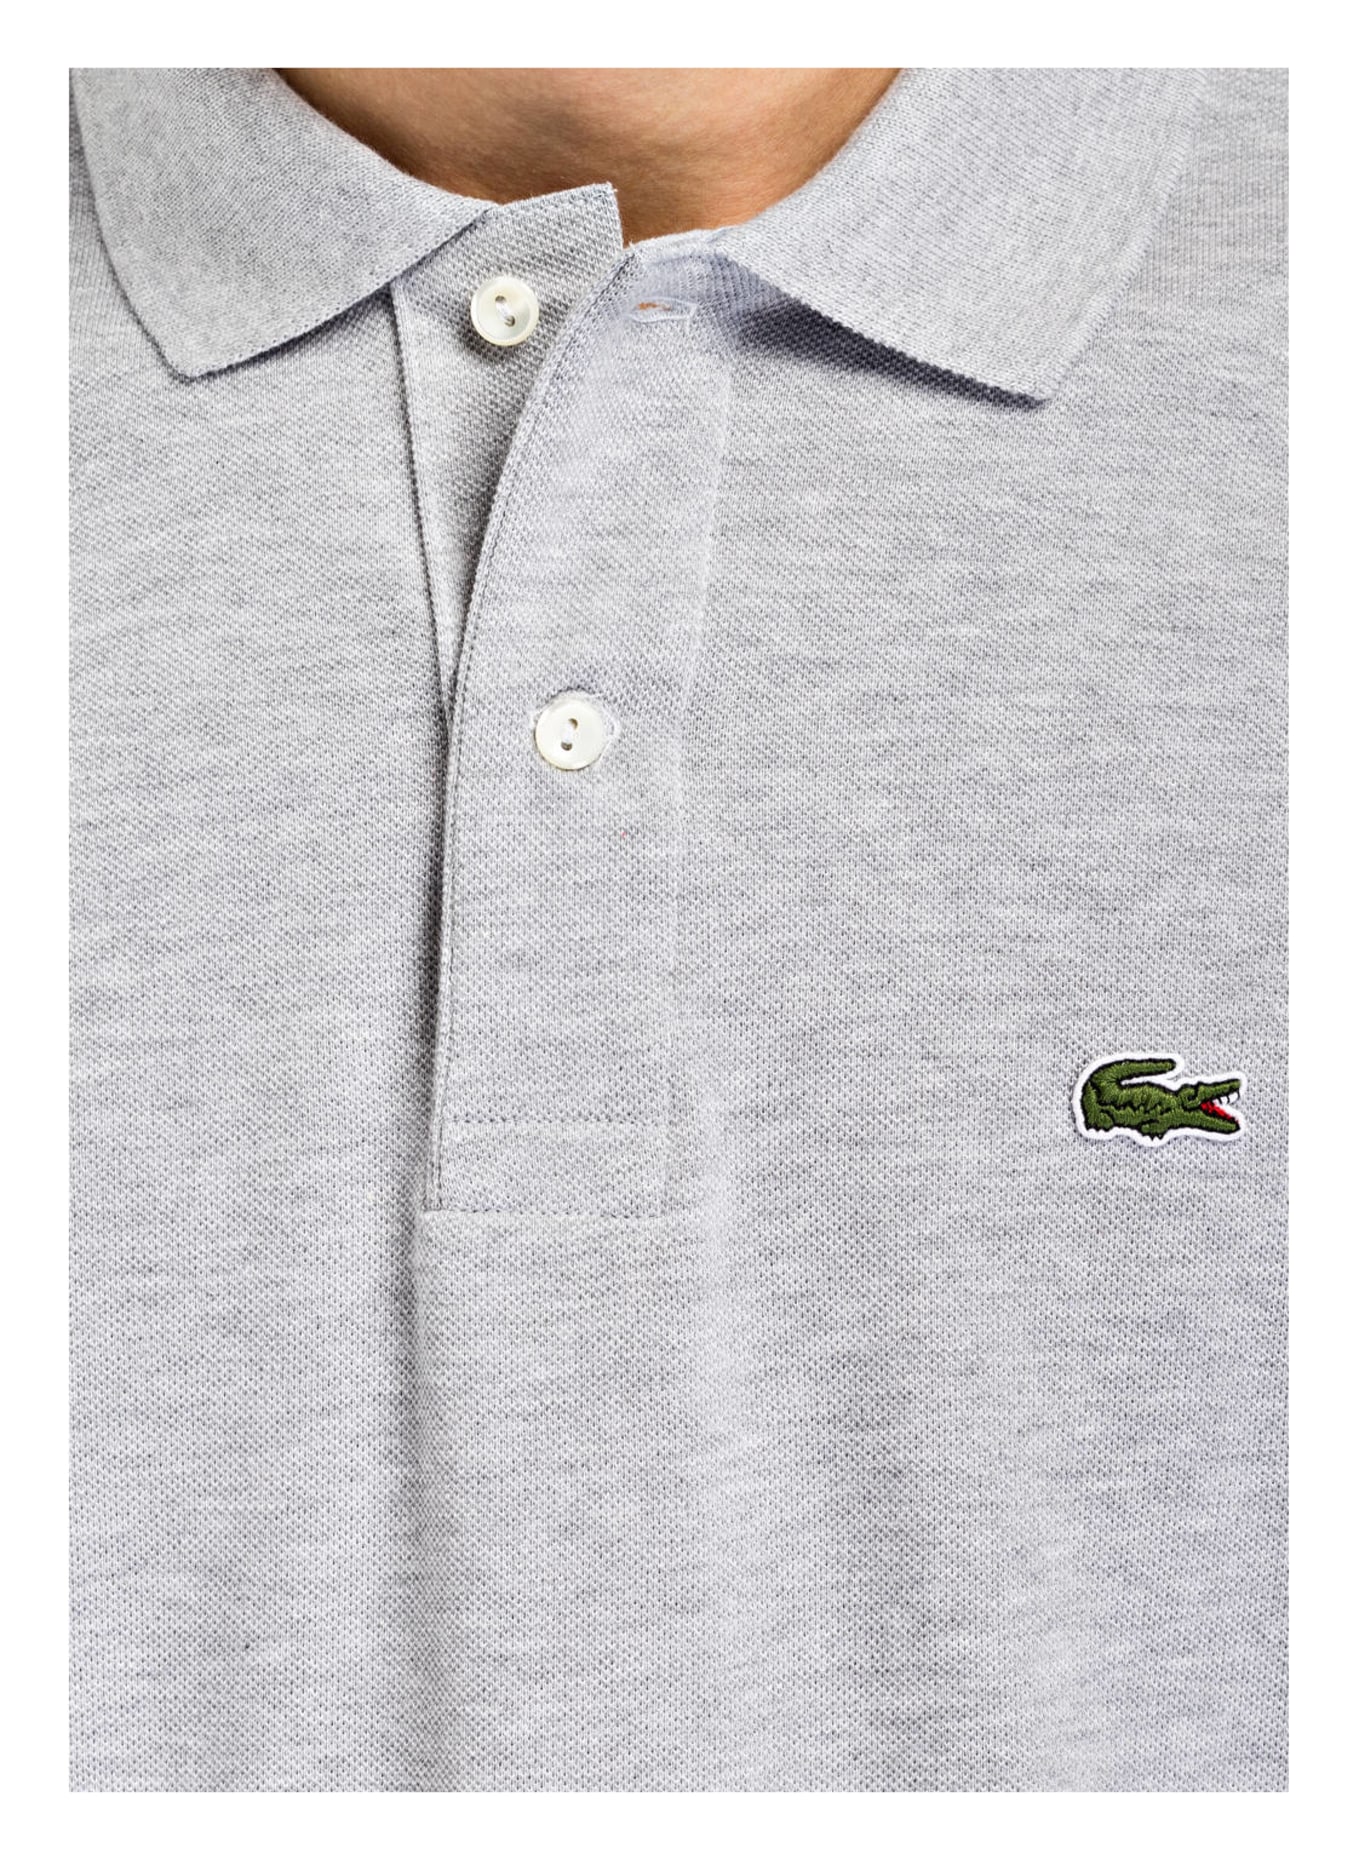 LACOSTE Piqué-Poloshirt Classic Fit, Farbe: GRAU MELIERT (Bild 4)